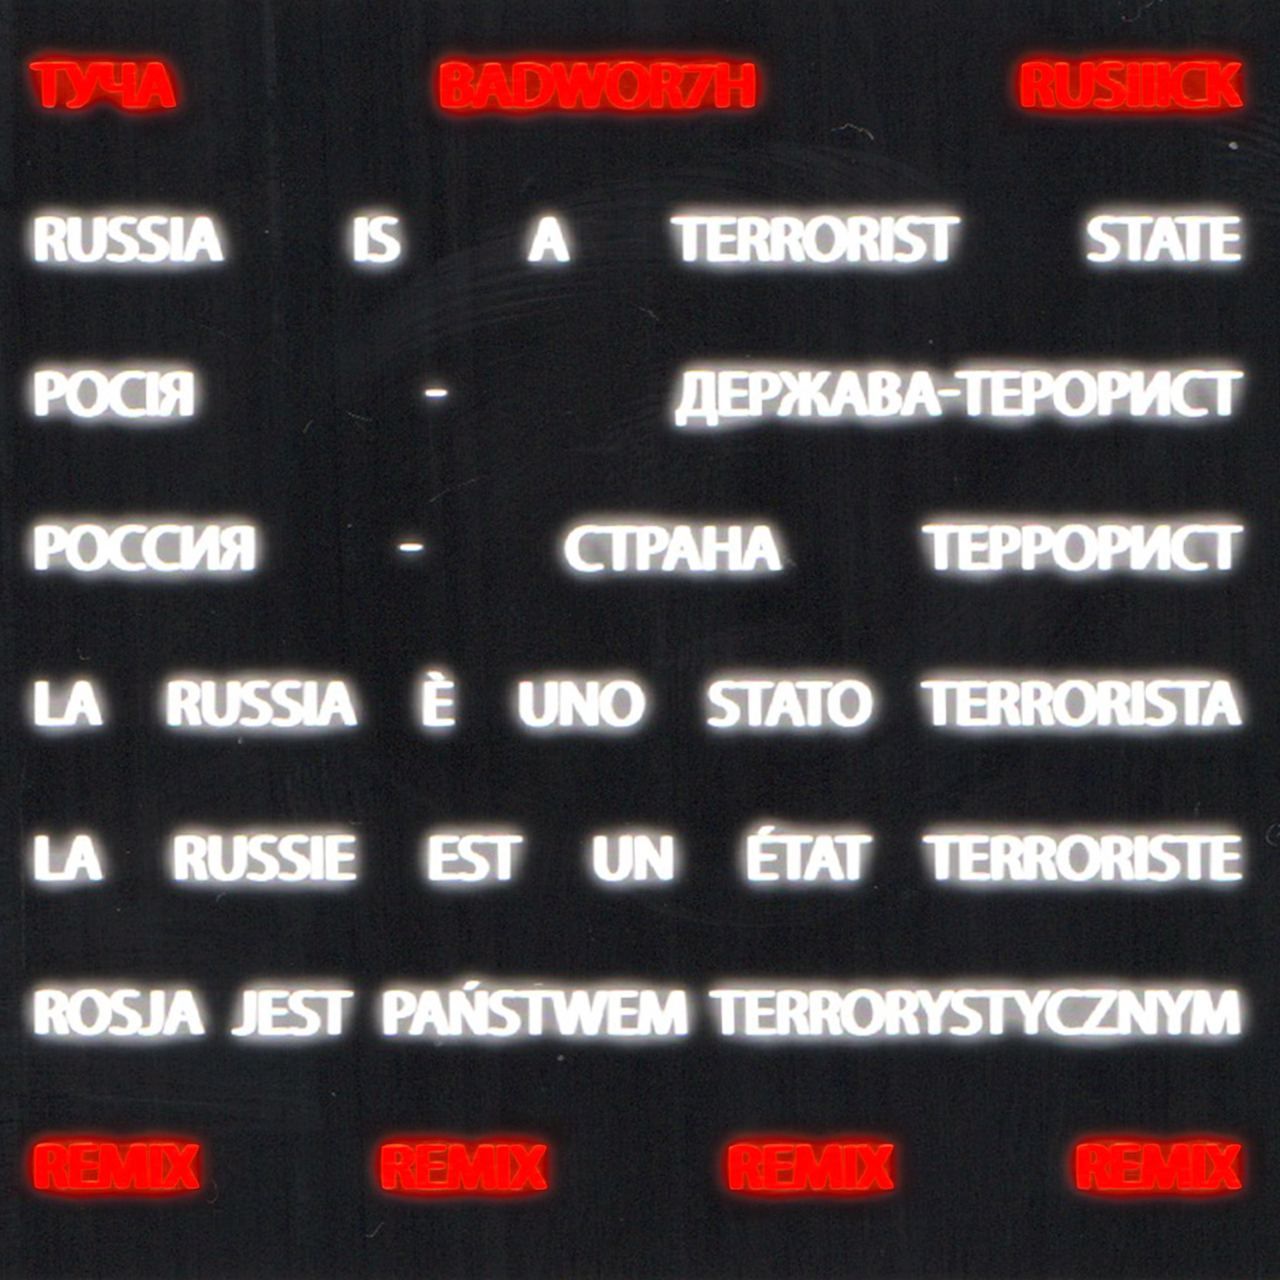 Tikiake ТУЧА – russia is a terrorist state (BADWOR7H Remix) - feat. RUSIIICK